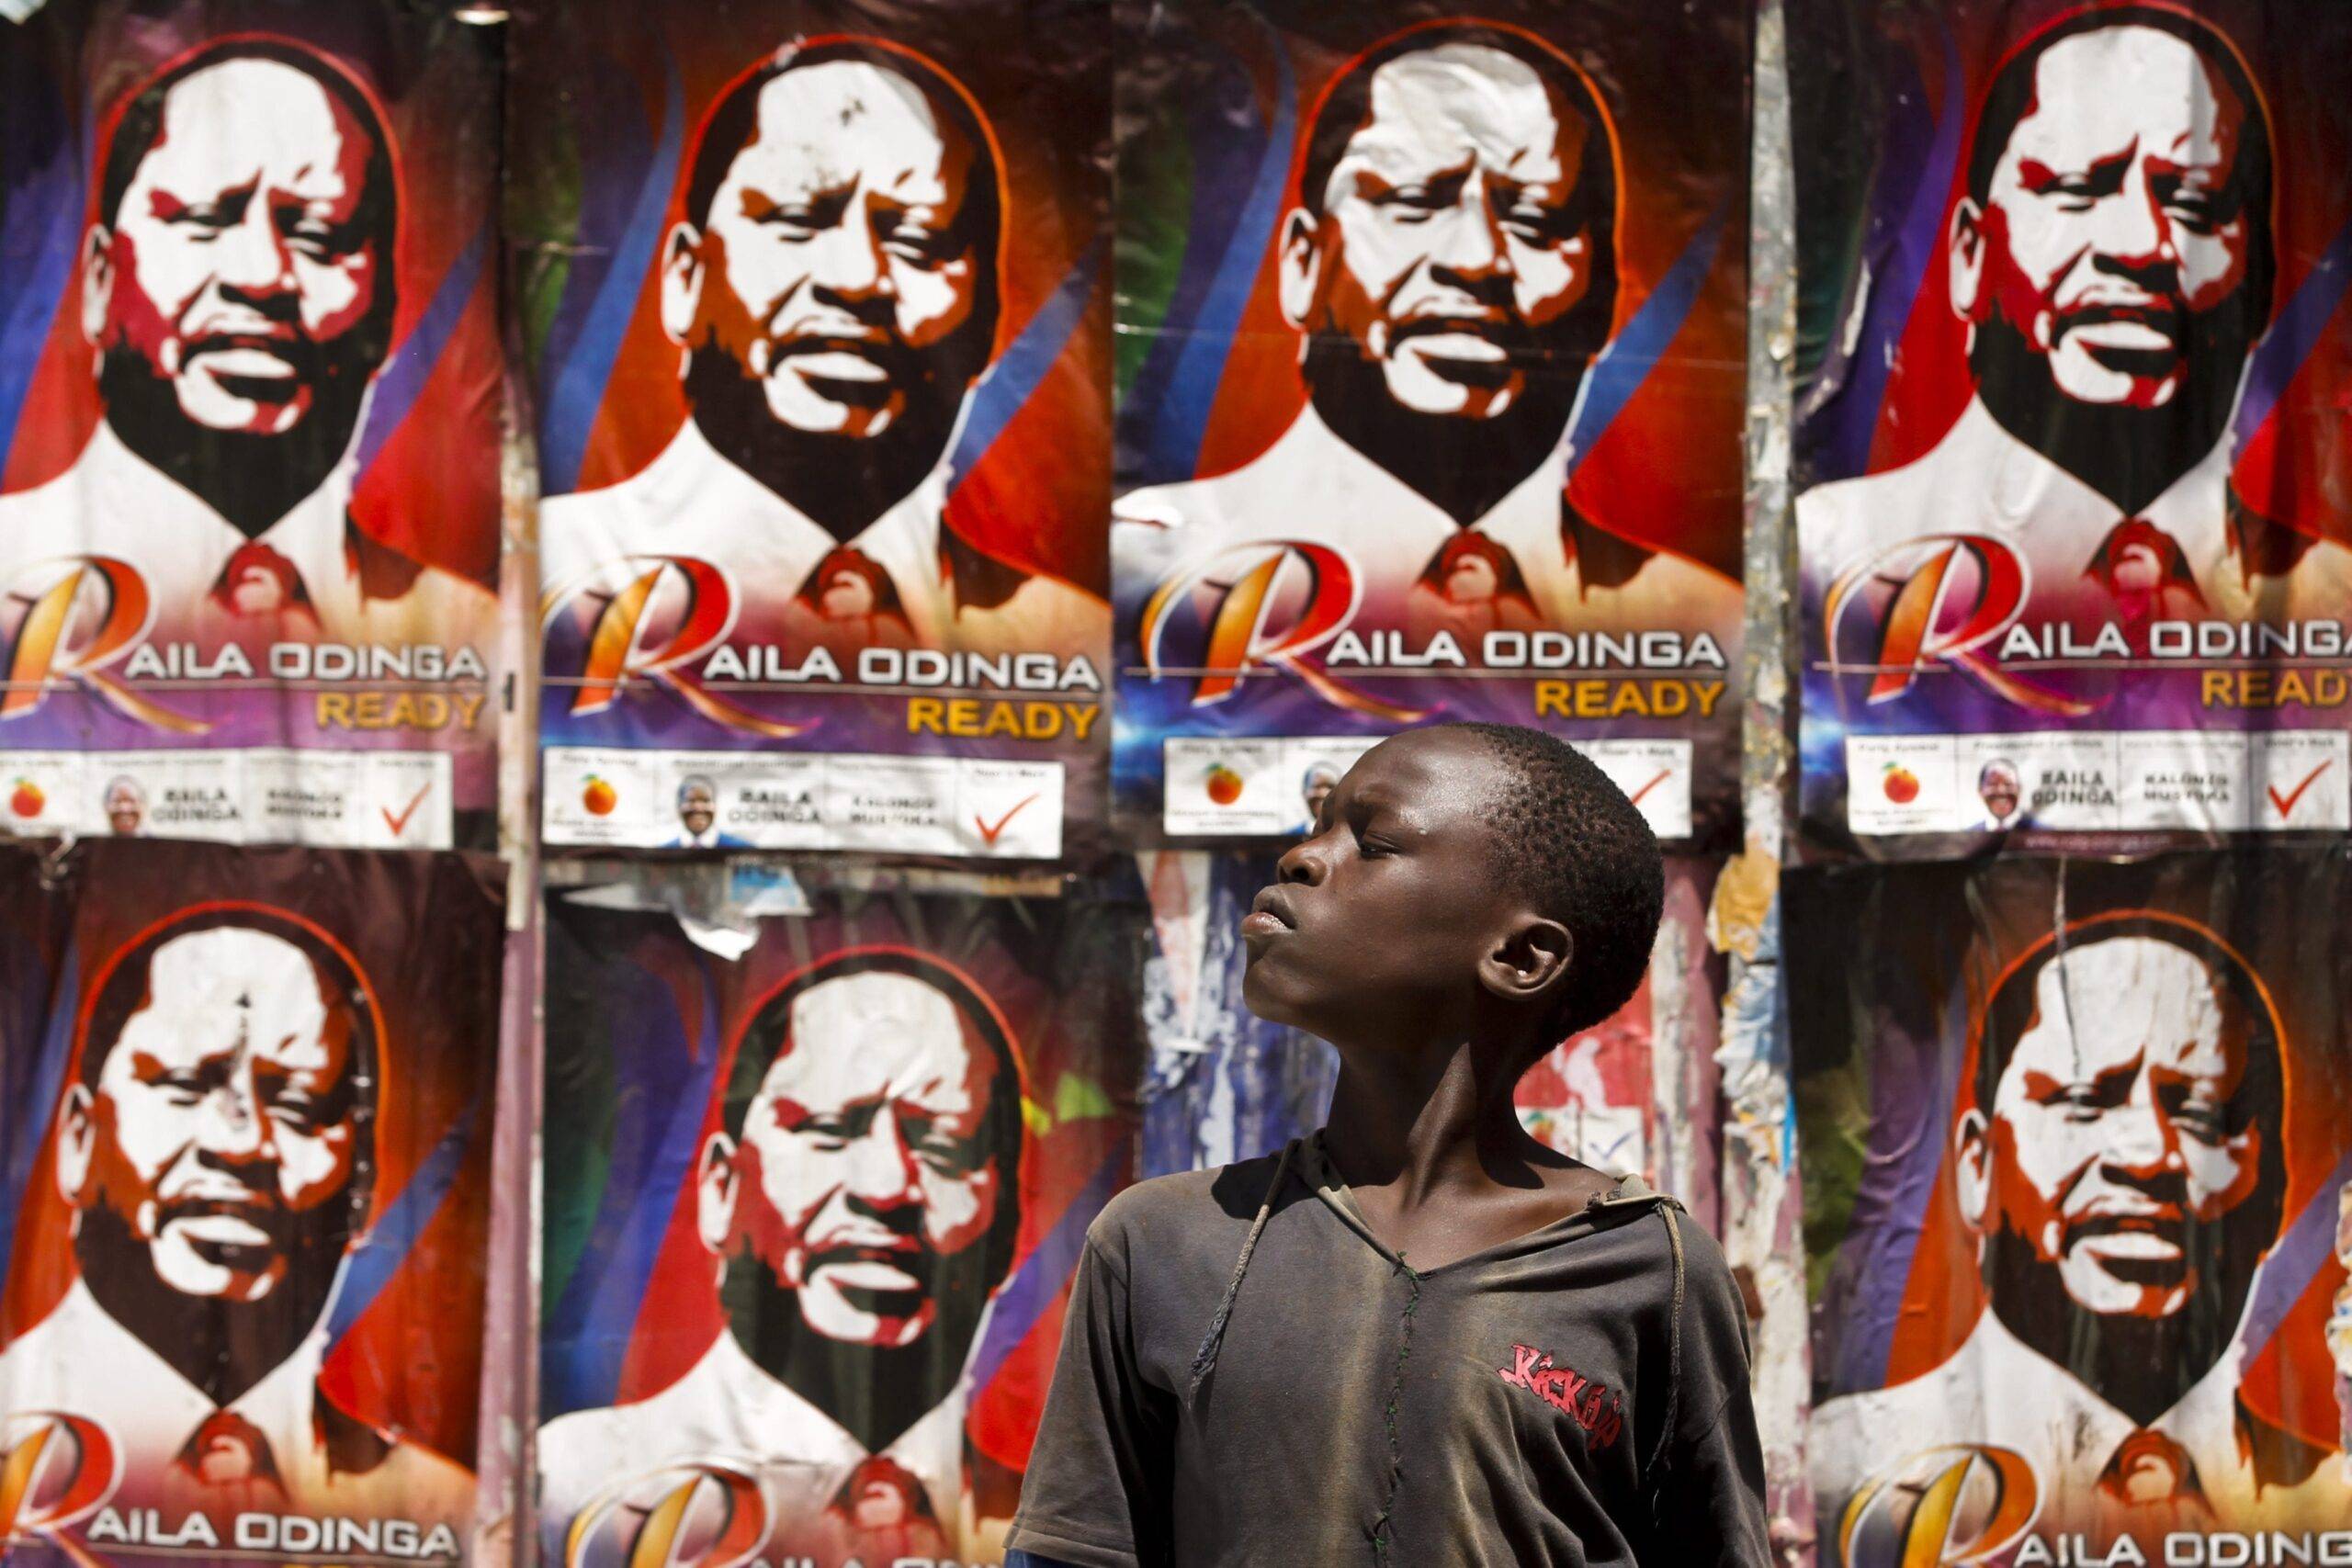 A young Kenyan boy looks on in front of the prime minister Raila Odinga's campaign posters on the wall near a polling station in the Kibera slum, Nairobi, Kenya, 04 March 2013 [EPA/Dai Kurokawa]